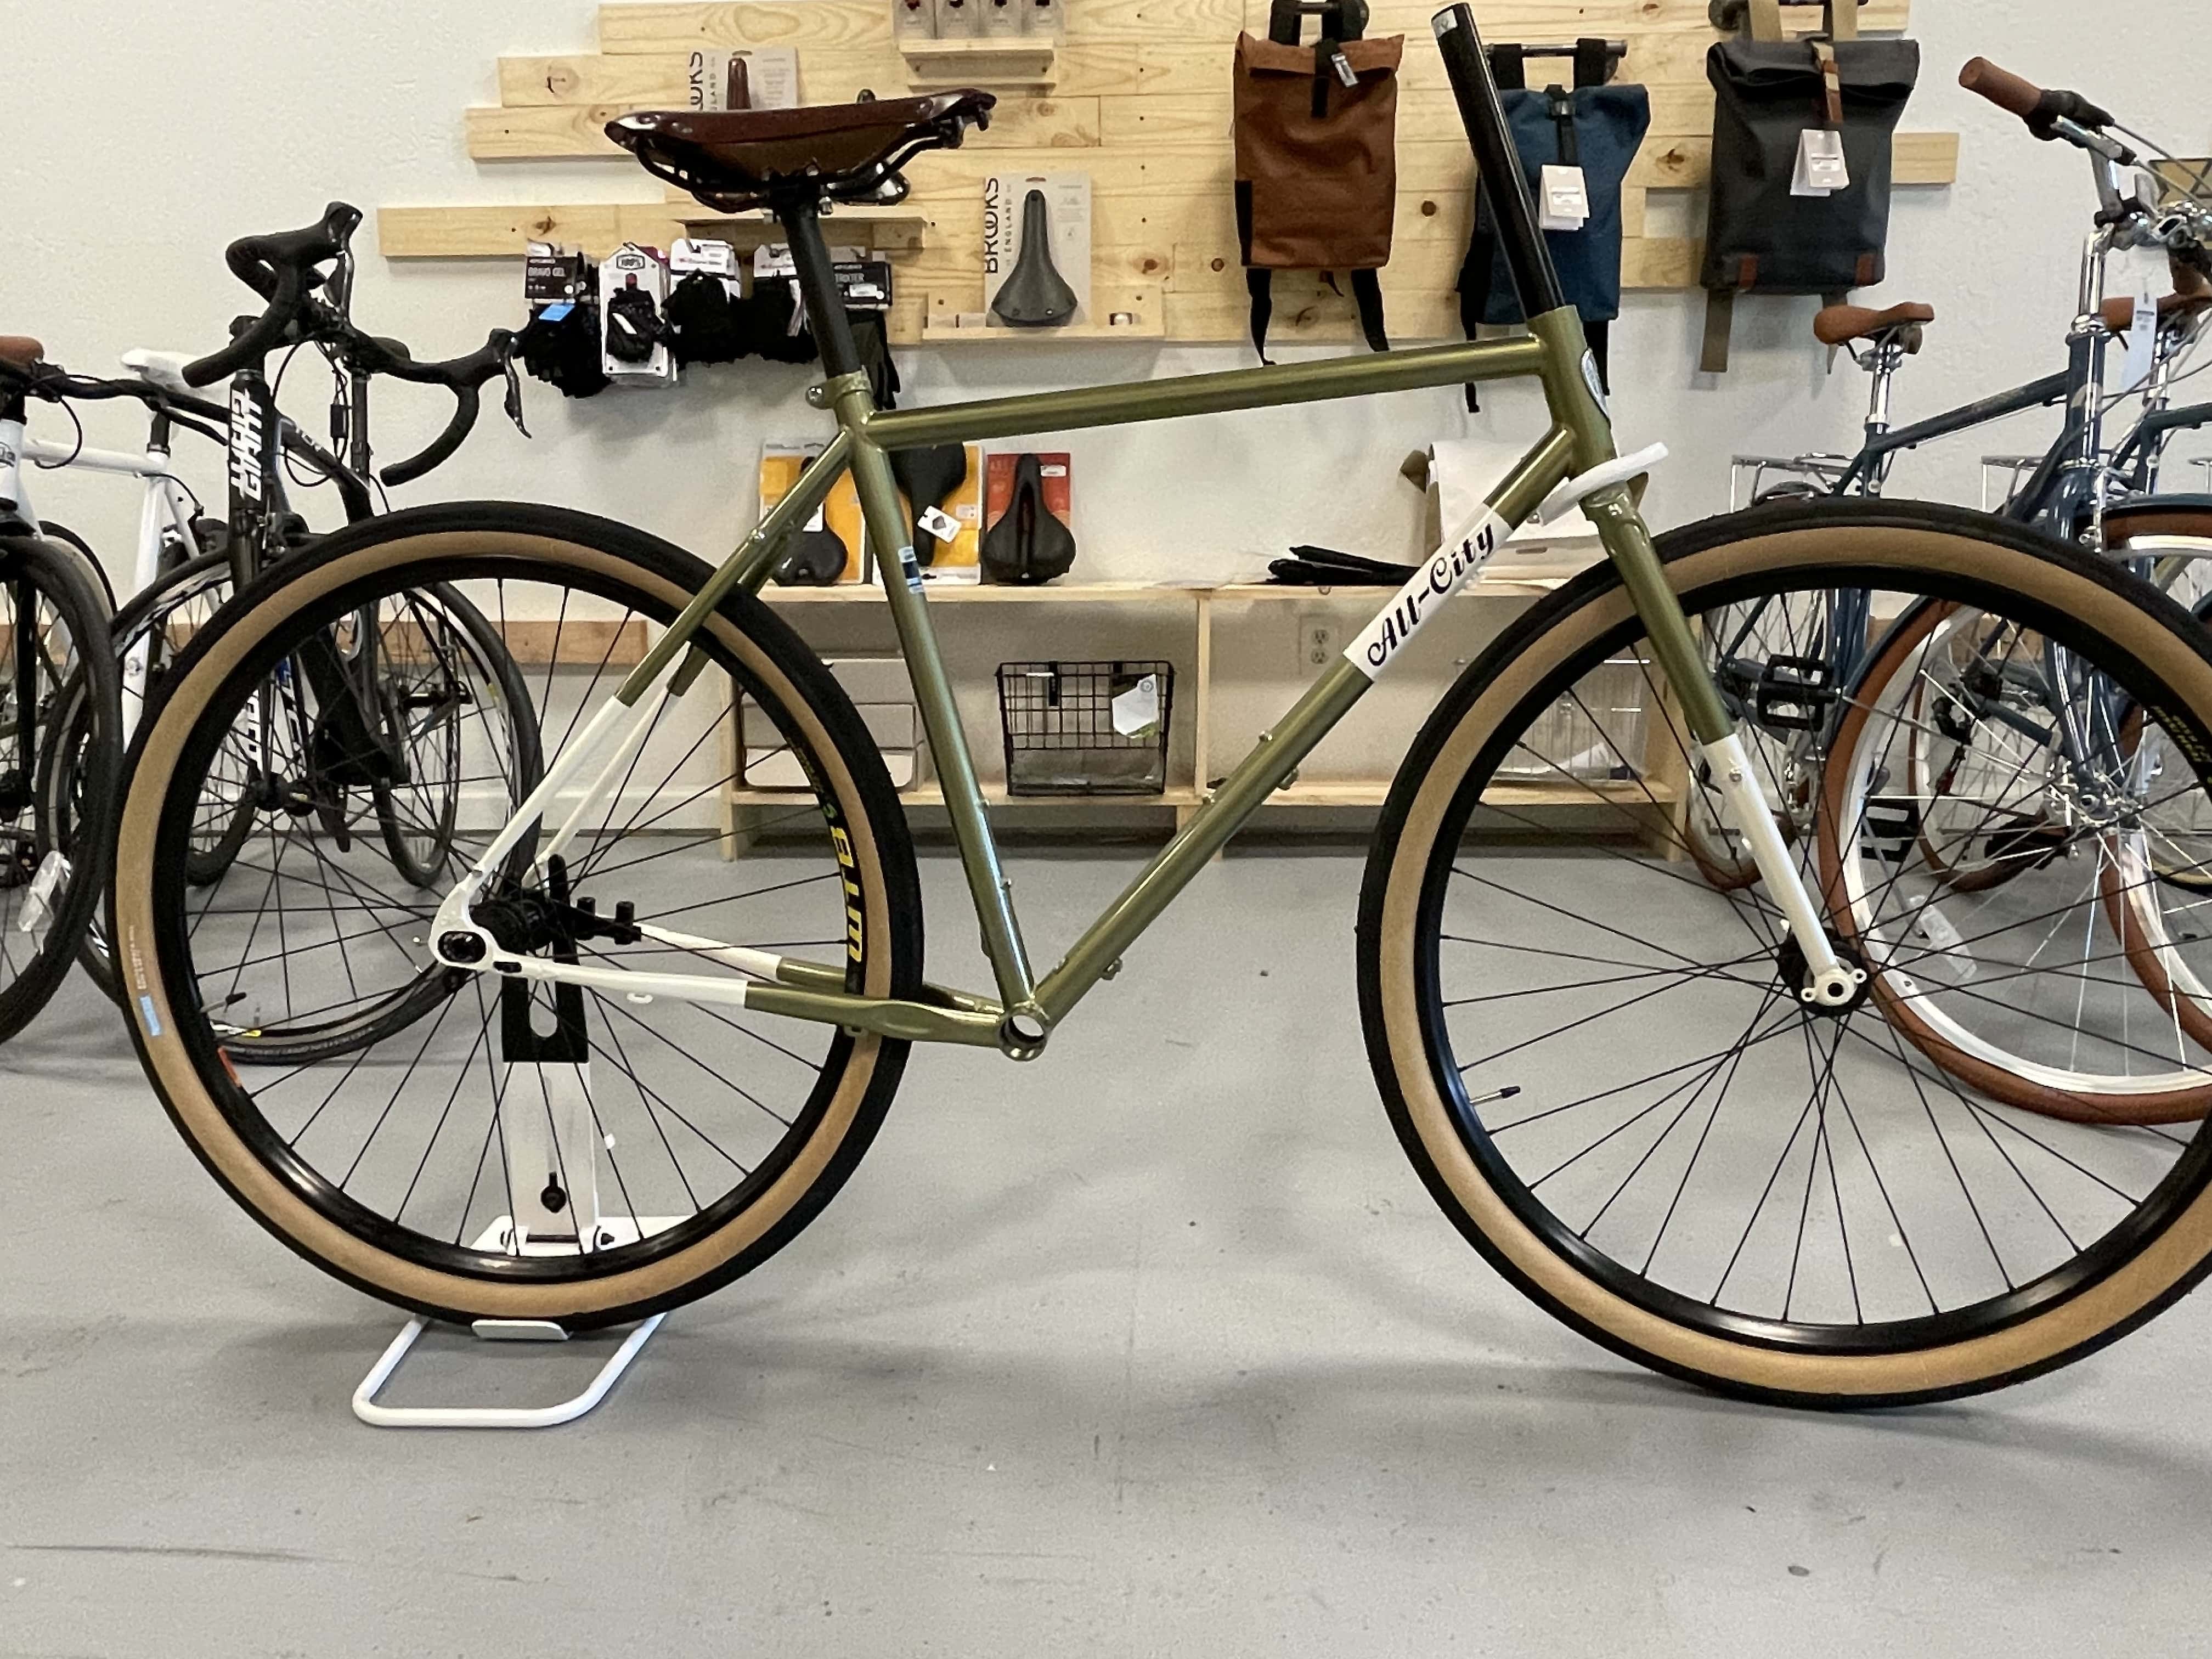 Smith & Bergen Bicycles - Petaluma, CA, US, bicycle shop